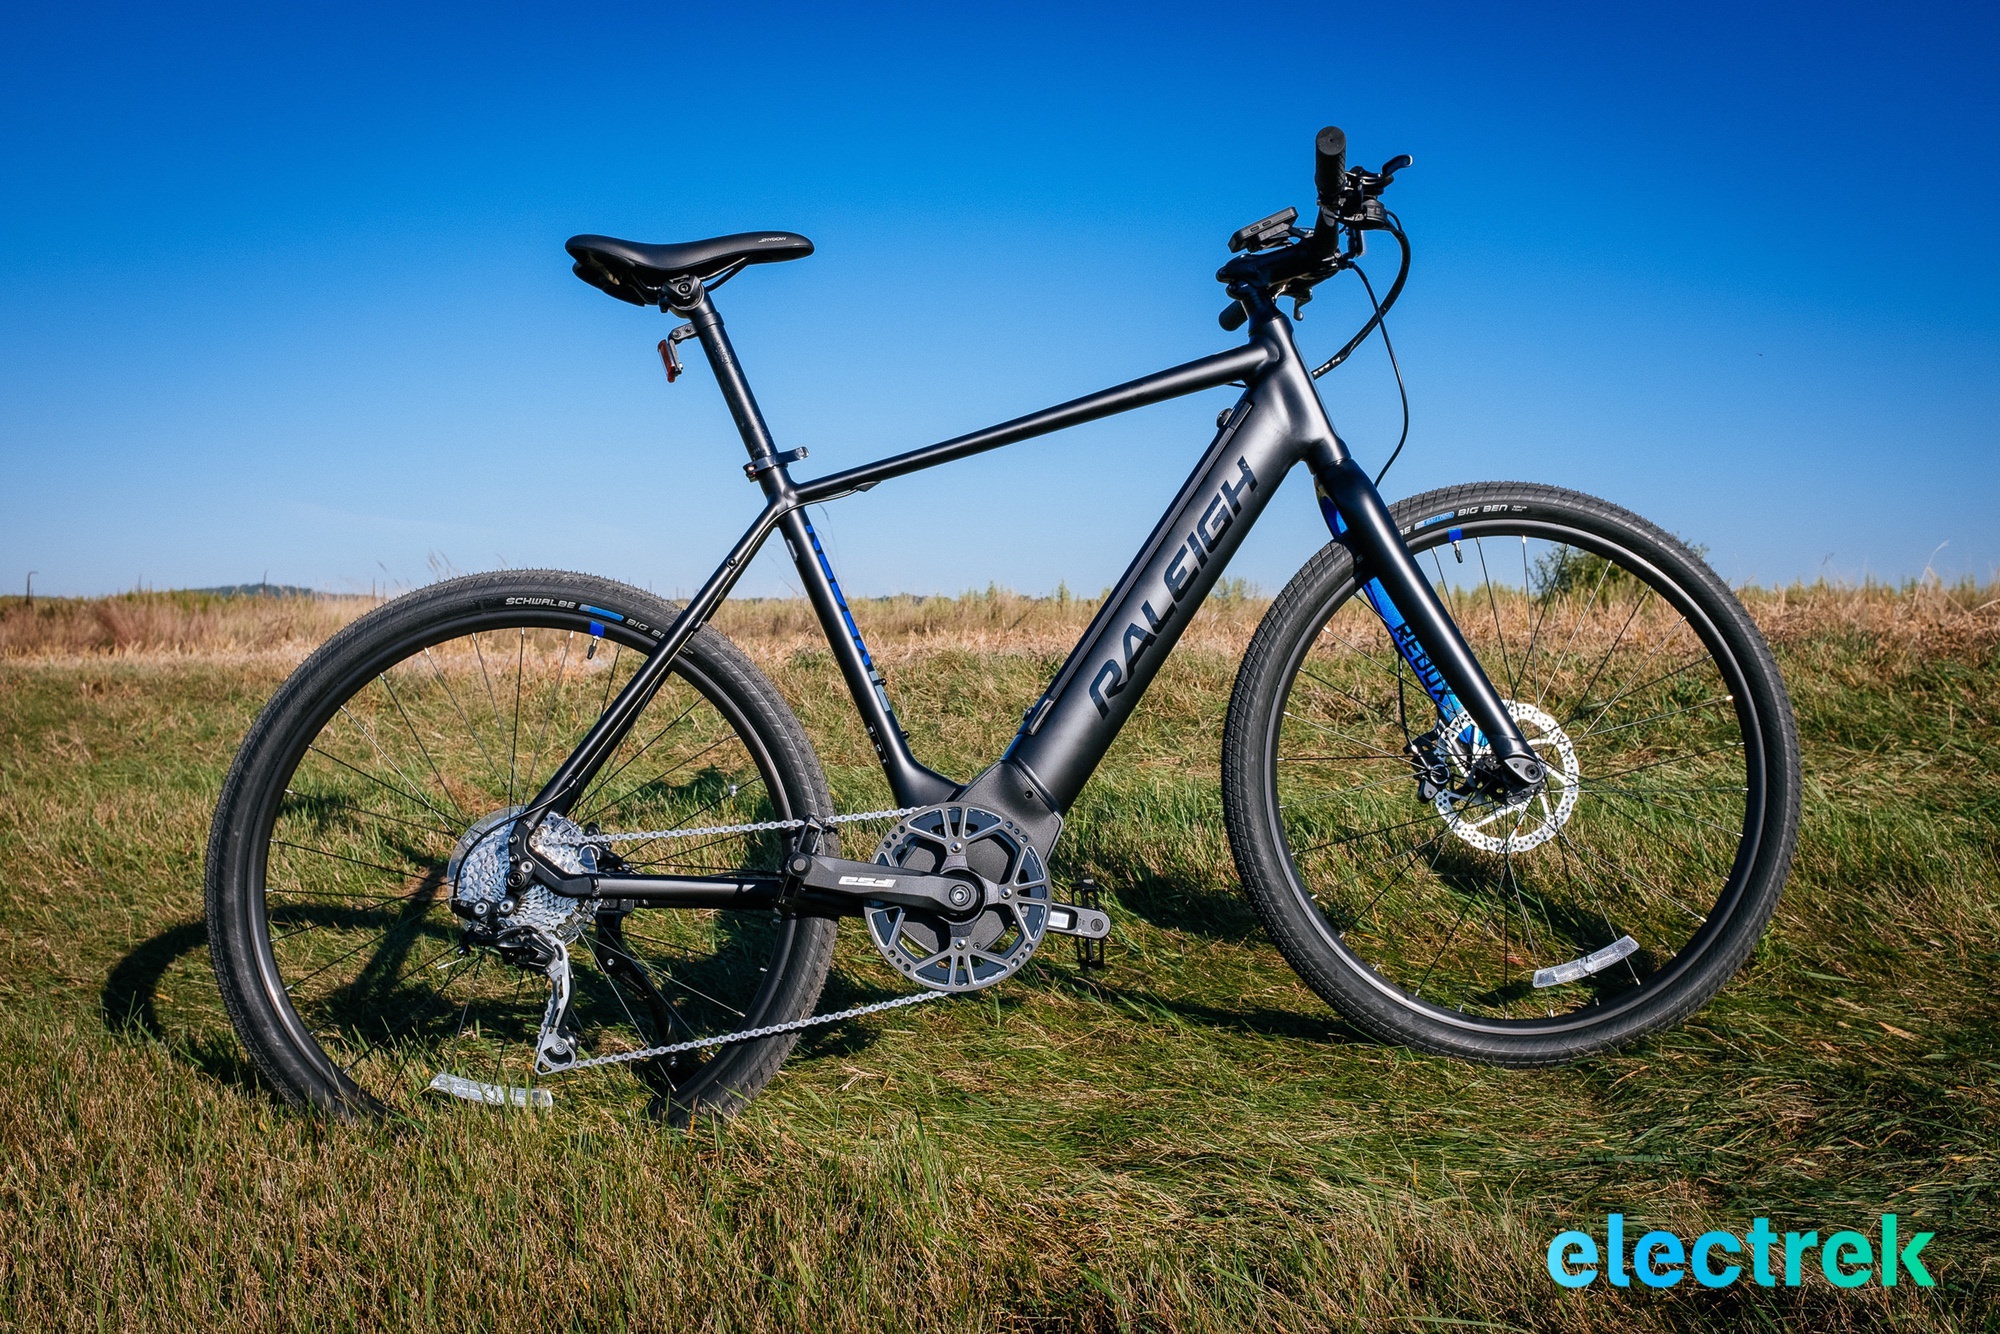 The Electrek Review Raleigh Redux IE w/Brose drivetrain the new electric commuter bike benchmark? Electrek